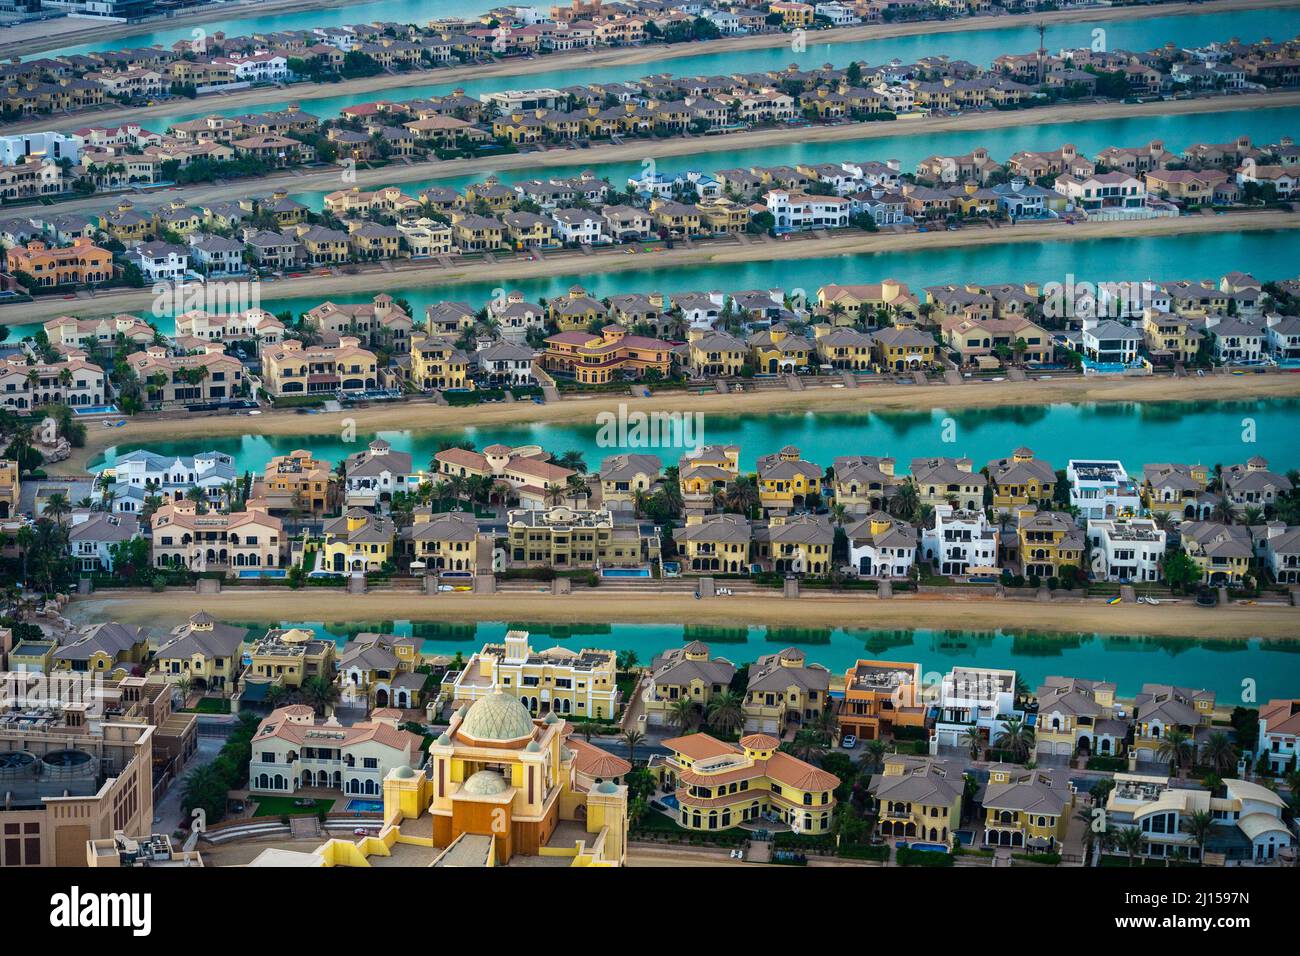 Dubai, UAE - Dec 05 2021: Aerial view of the expensive luxury houses of Dubai Palm Jumeirah Stock Photo